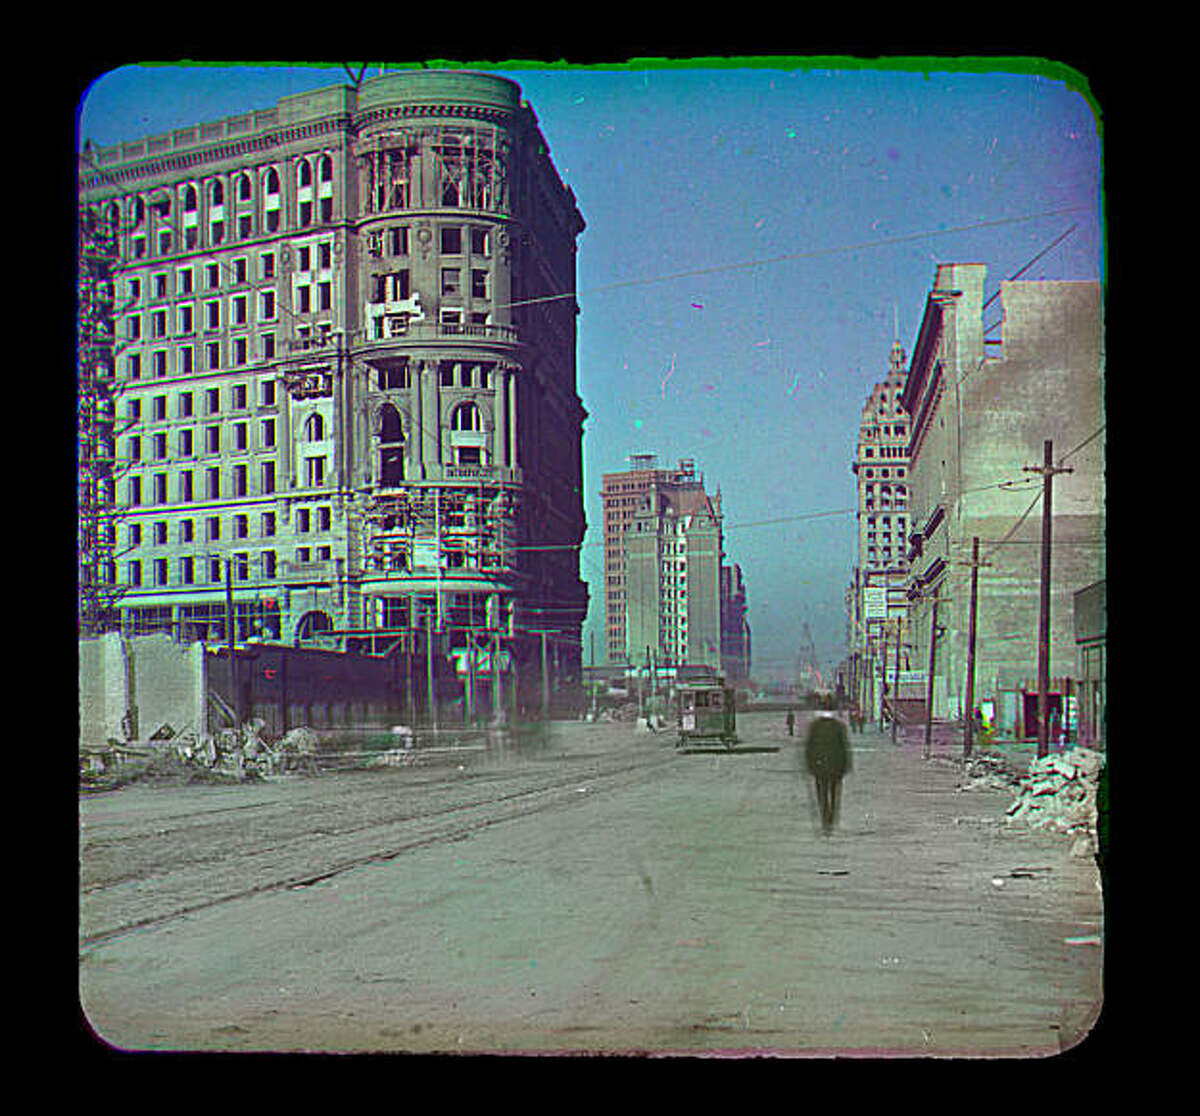 ¥6437.045 G.H. Holt, Market St. Flood Bldg., Oct. 1906, kromogram of street-level view of earthquake-damaged San Francisco. Photographic History Collection